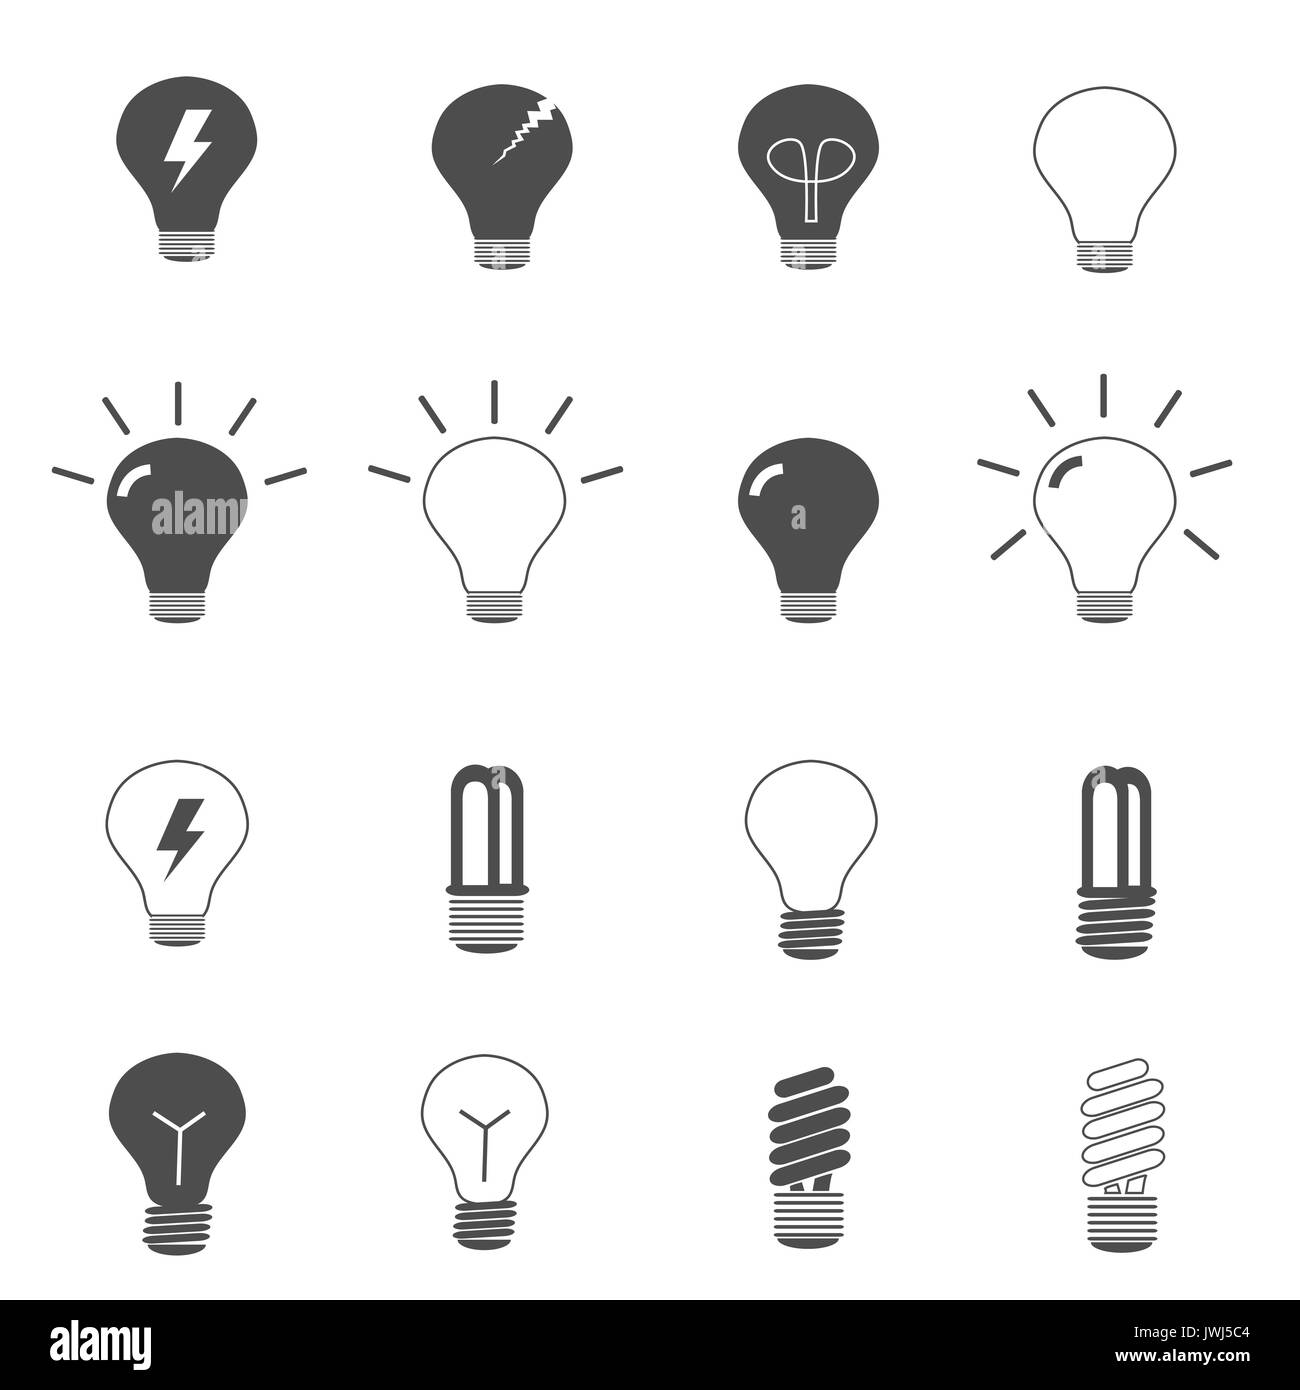 Gluhbirne Und Led Lampe Icons Set Vector Stockfotografie Alamy